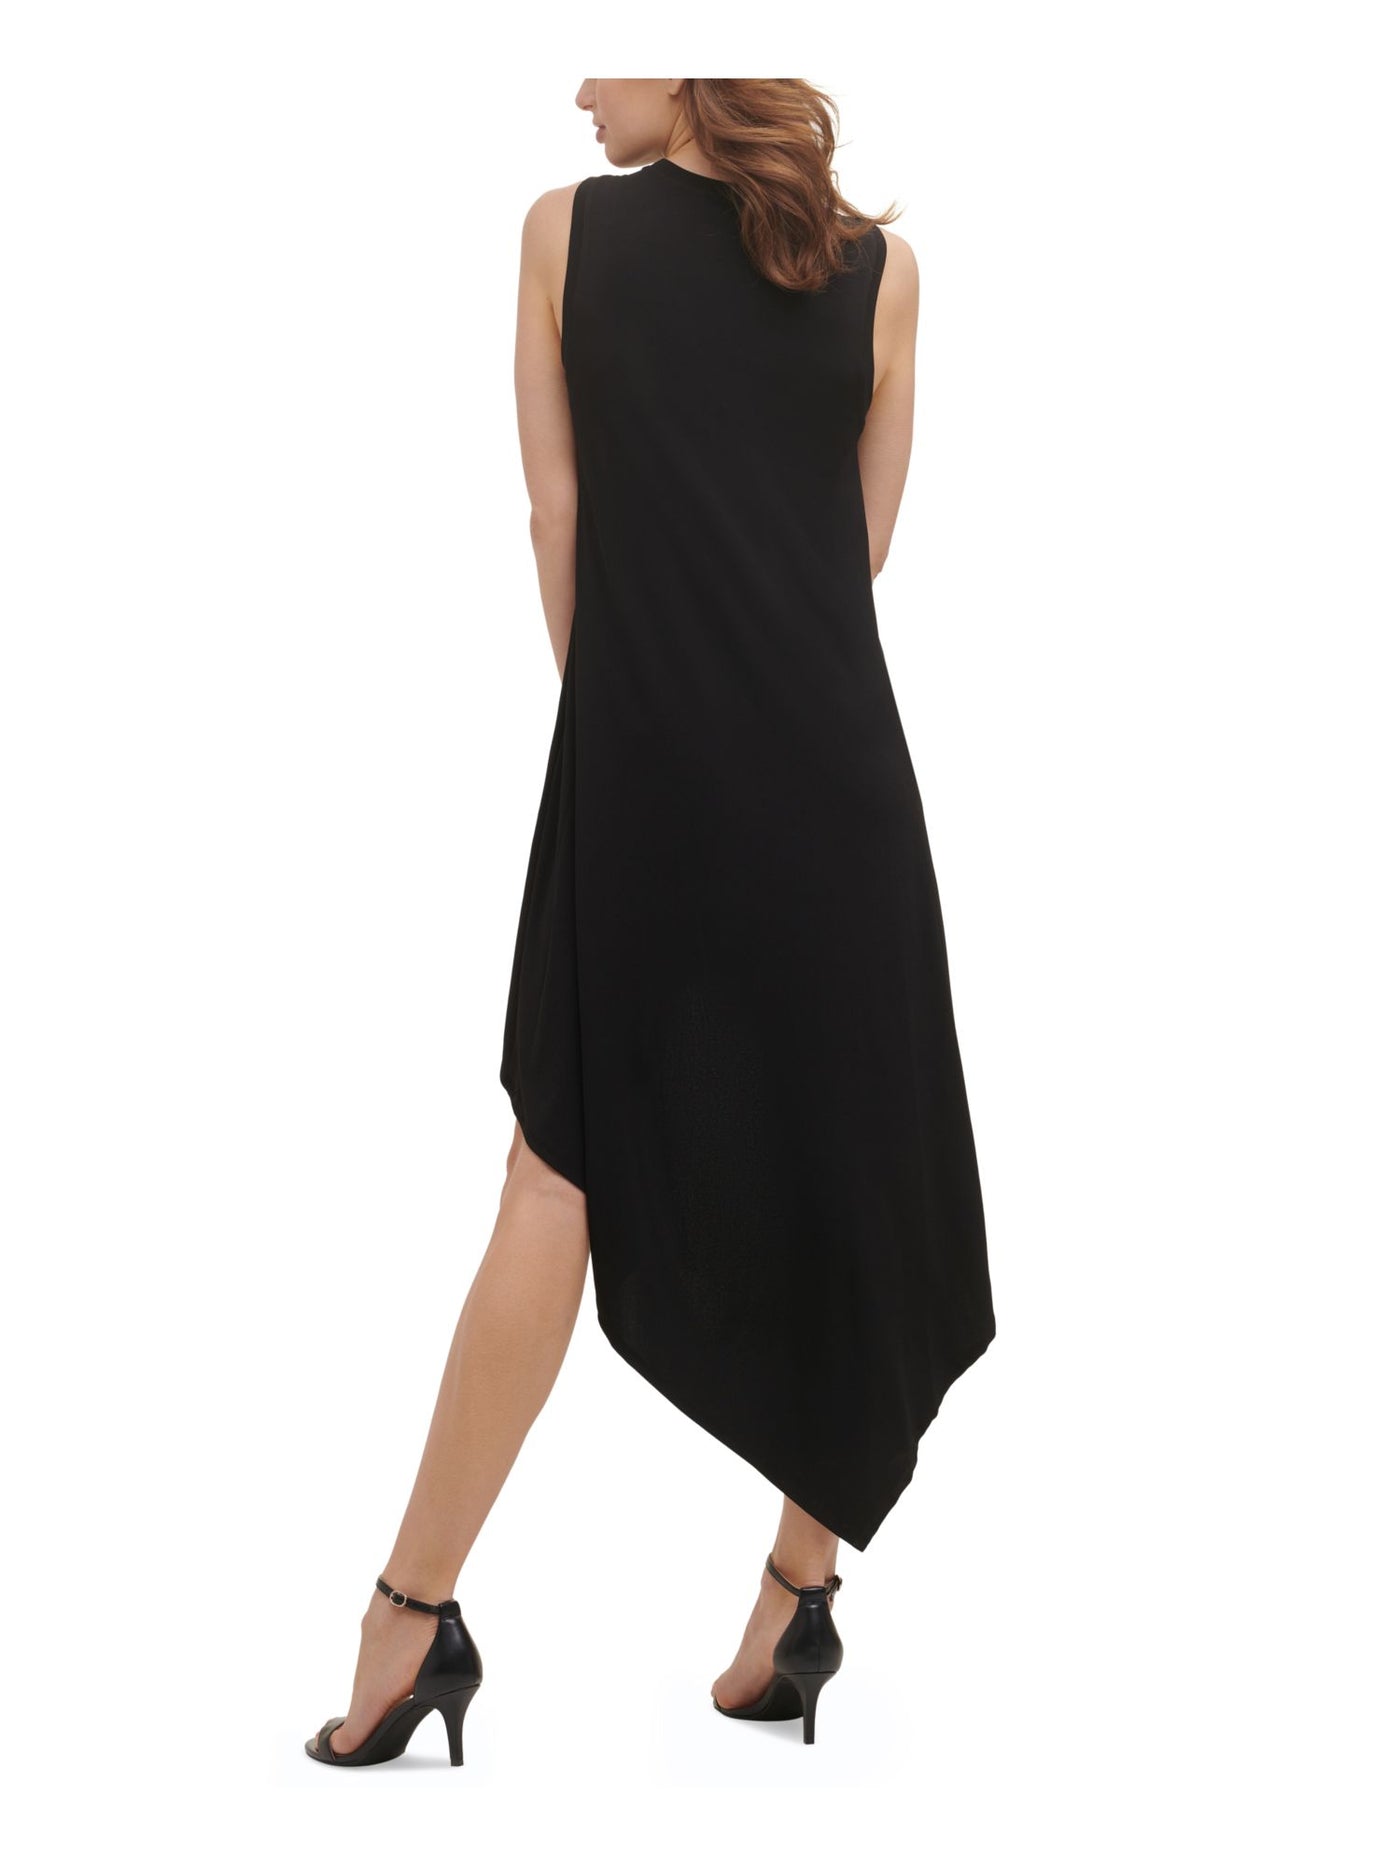 KENSIE DRESSES Womens Black Jersey Sleeveless Jewel Neck Maxi Evening Hi-Lo Dress XS